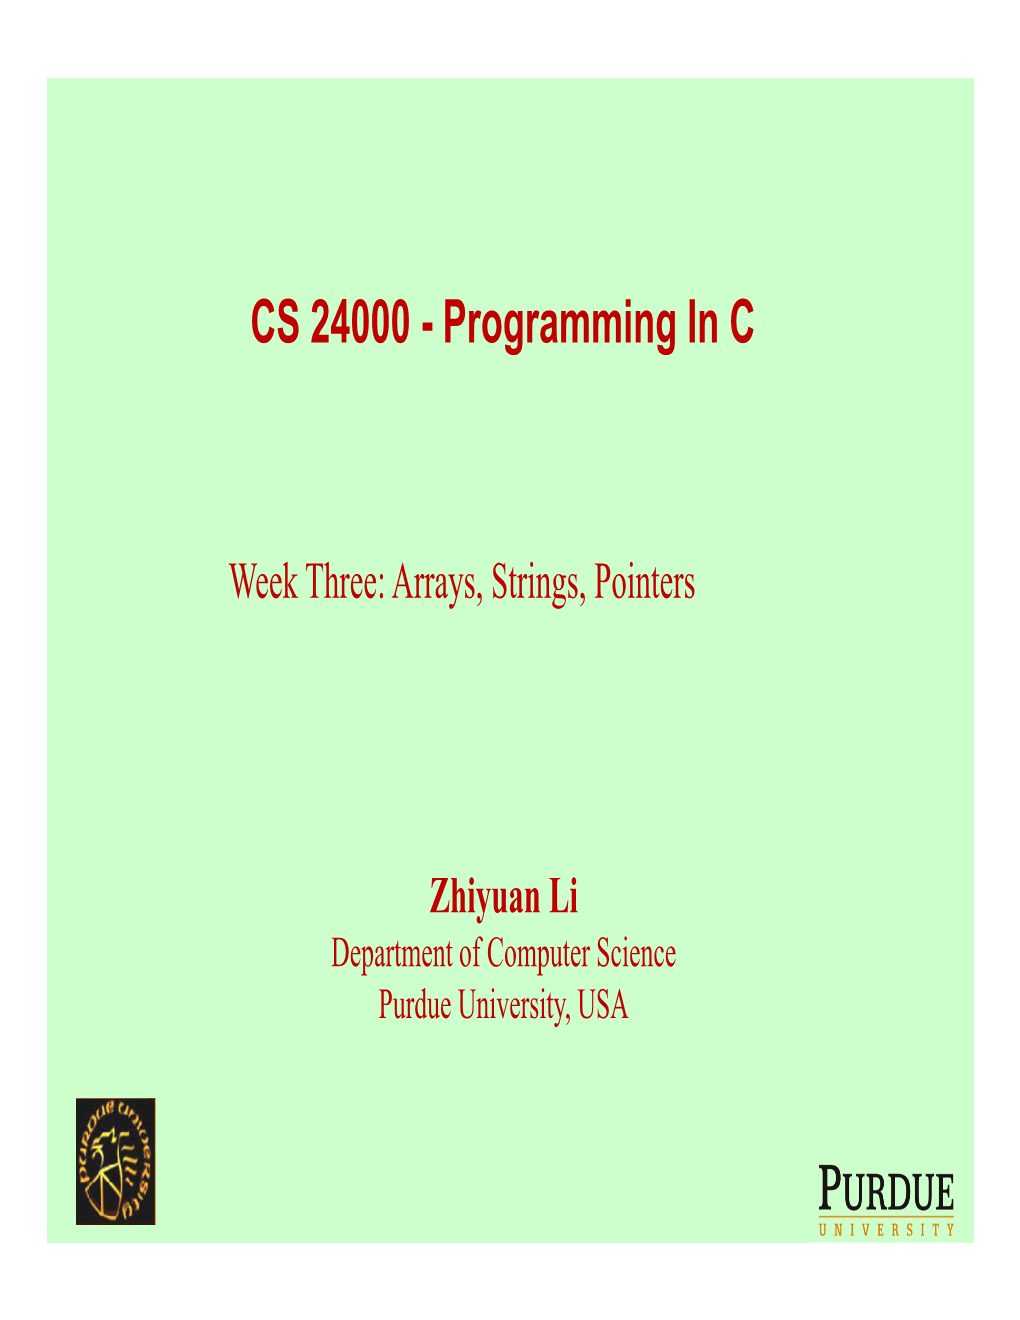 CS 24000 - Programming in C